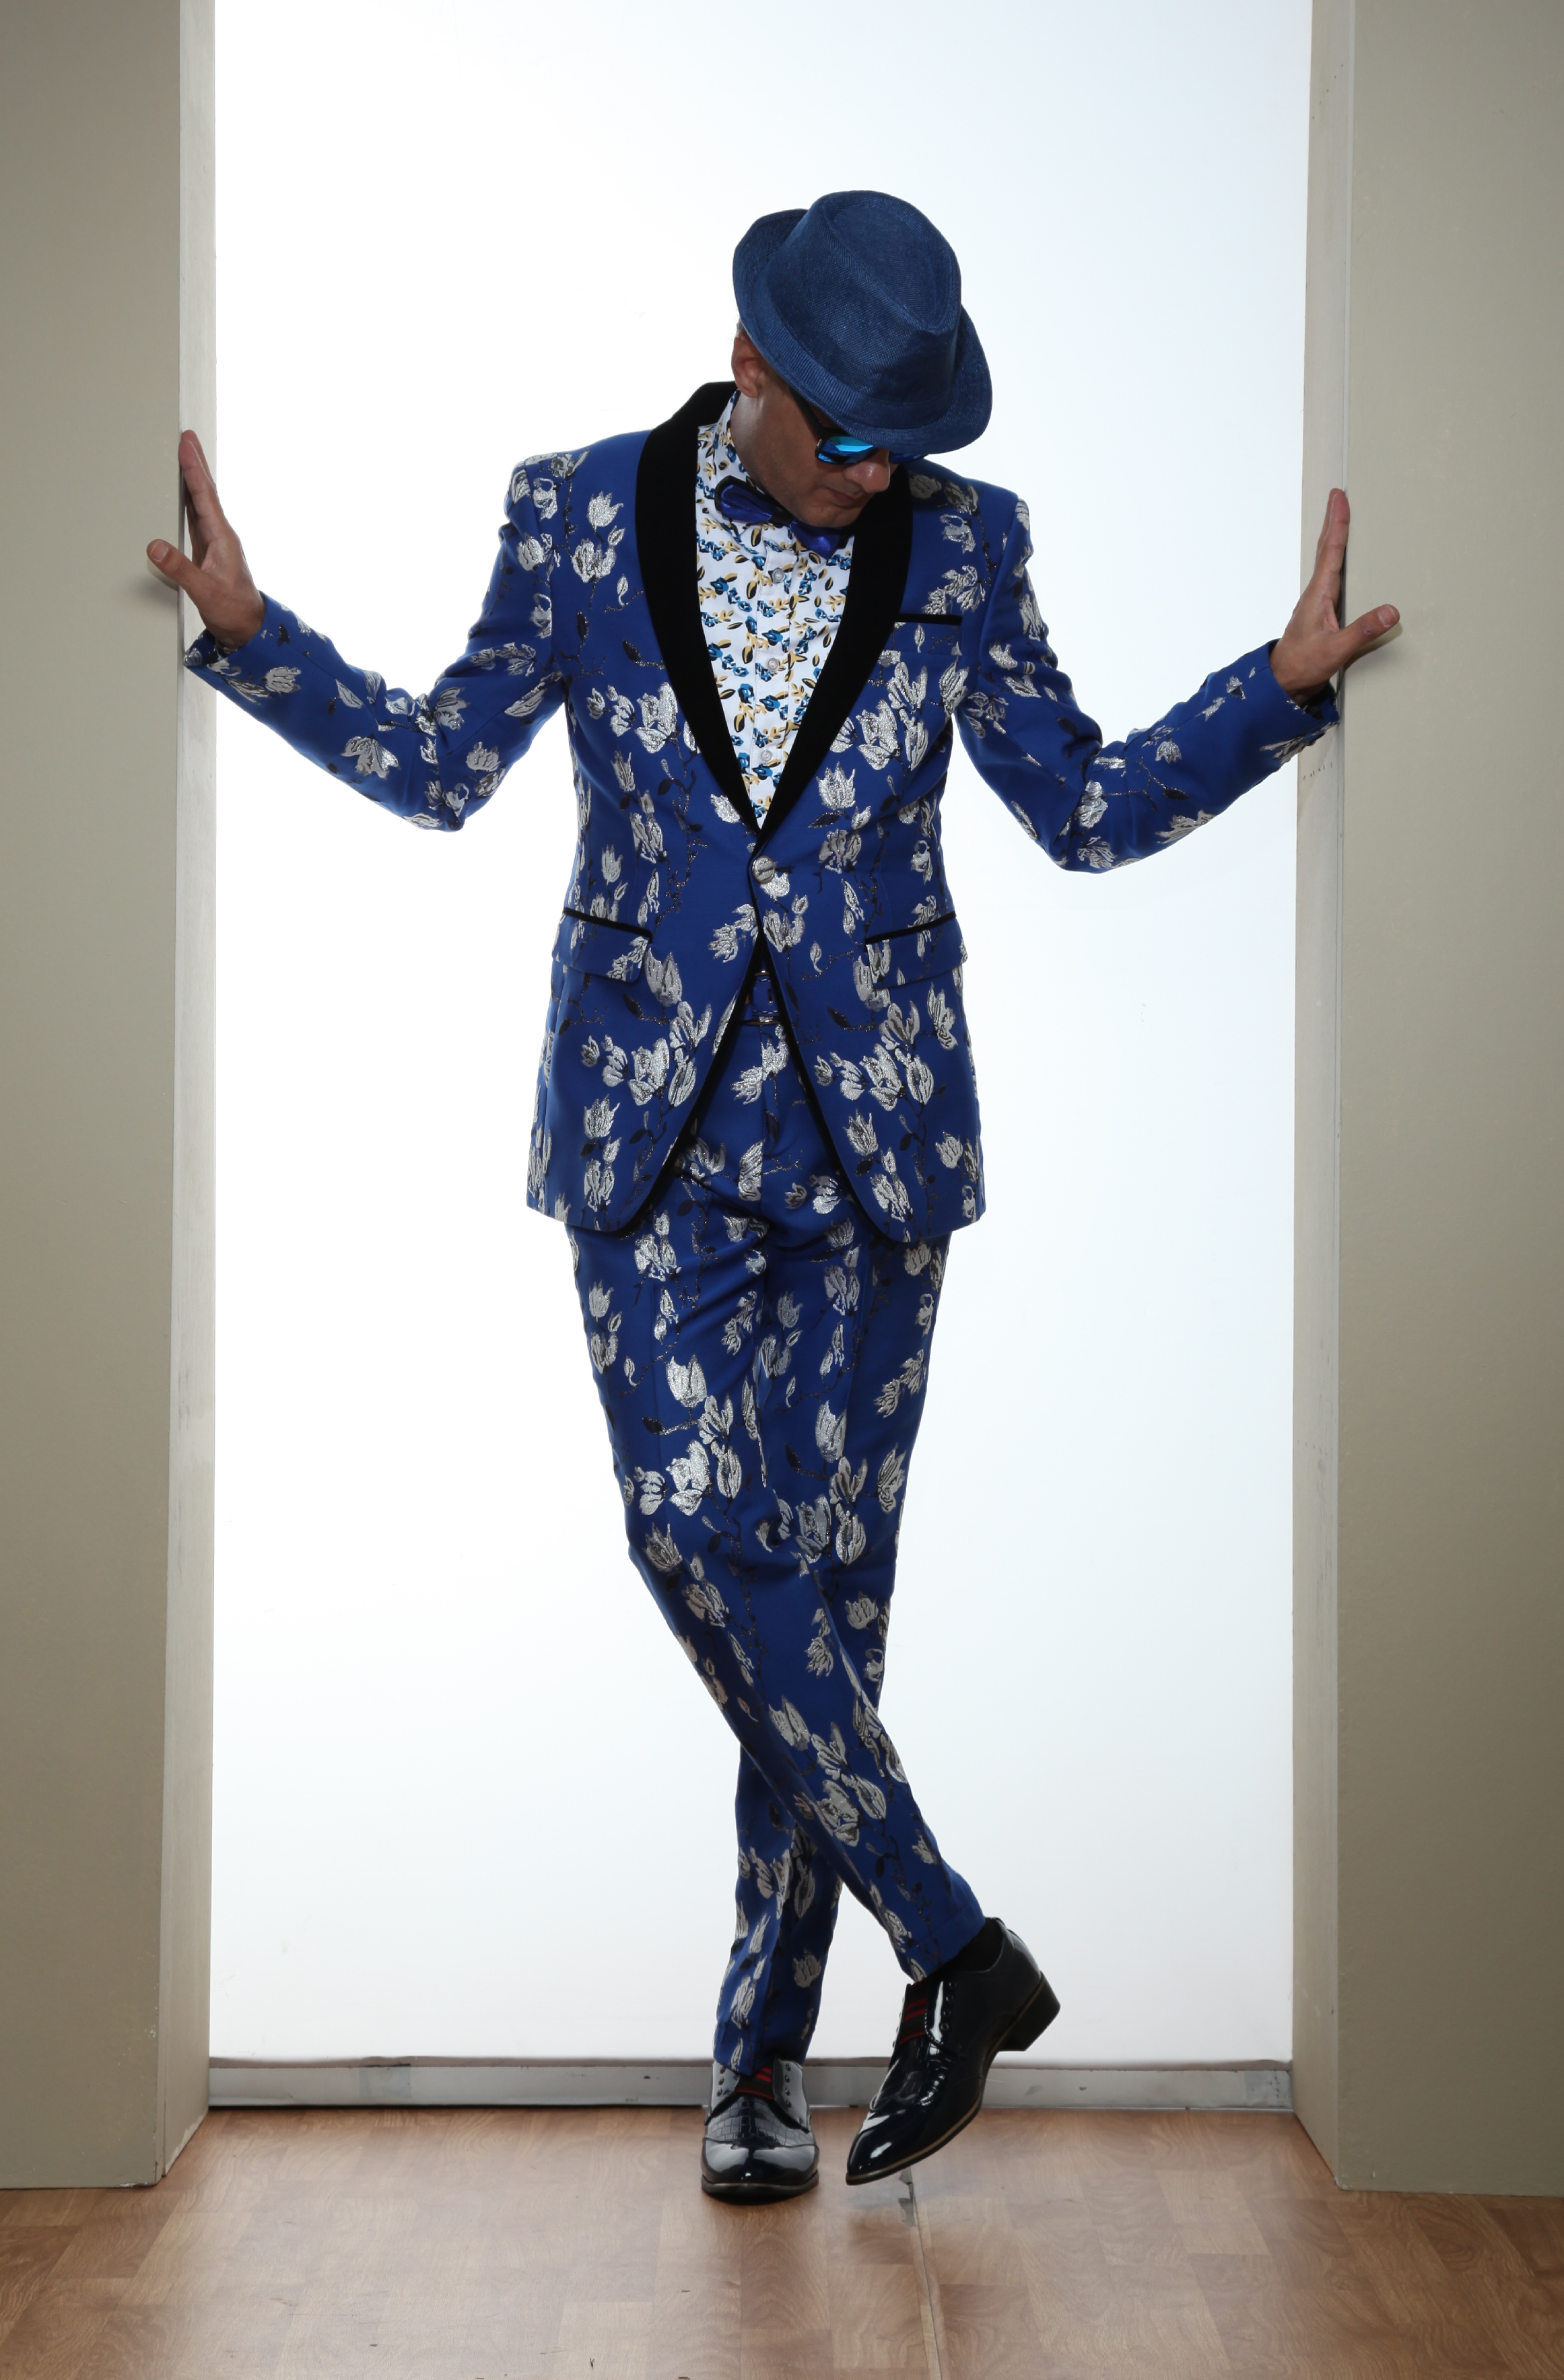 Suit Rental Suits Rent Hire Designer My Singapore Tailor Tailors Rentals Shop Tuxedo Black Tie Wedding Formal 66